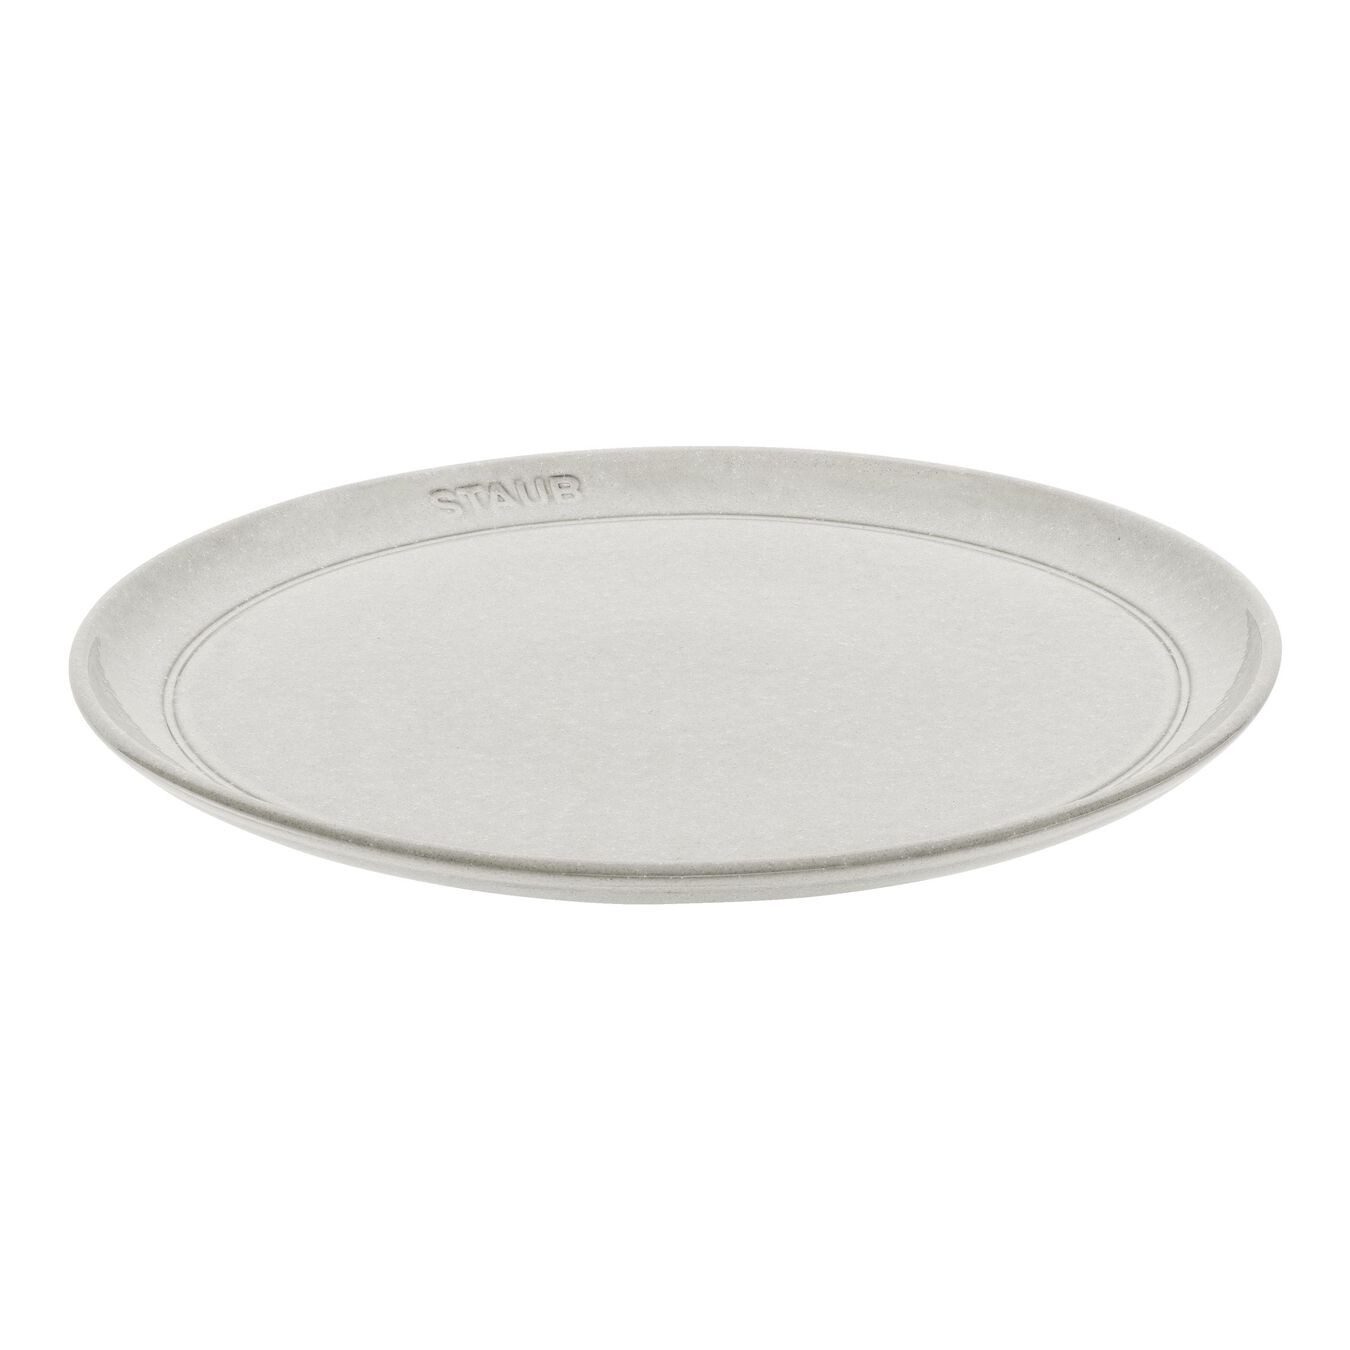 26 cm ceramic round Plate flat, white truffle,,large 1